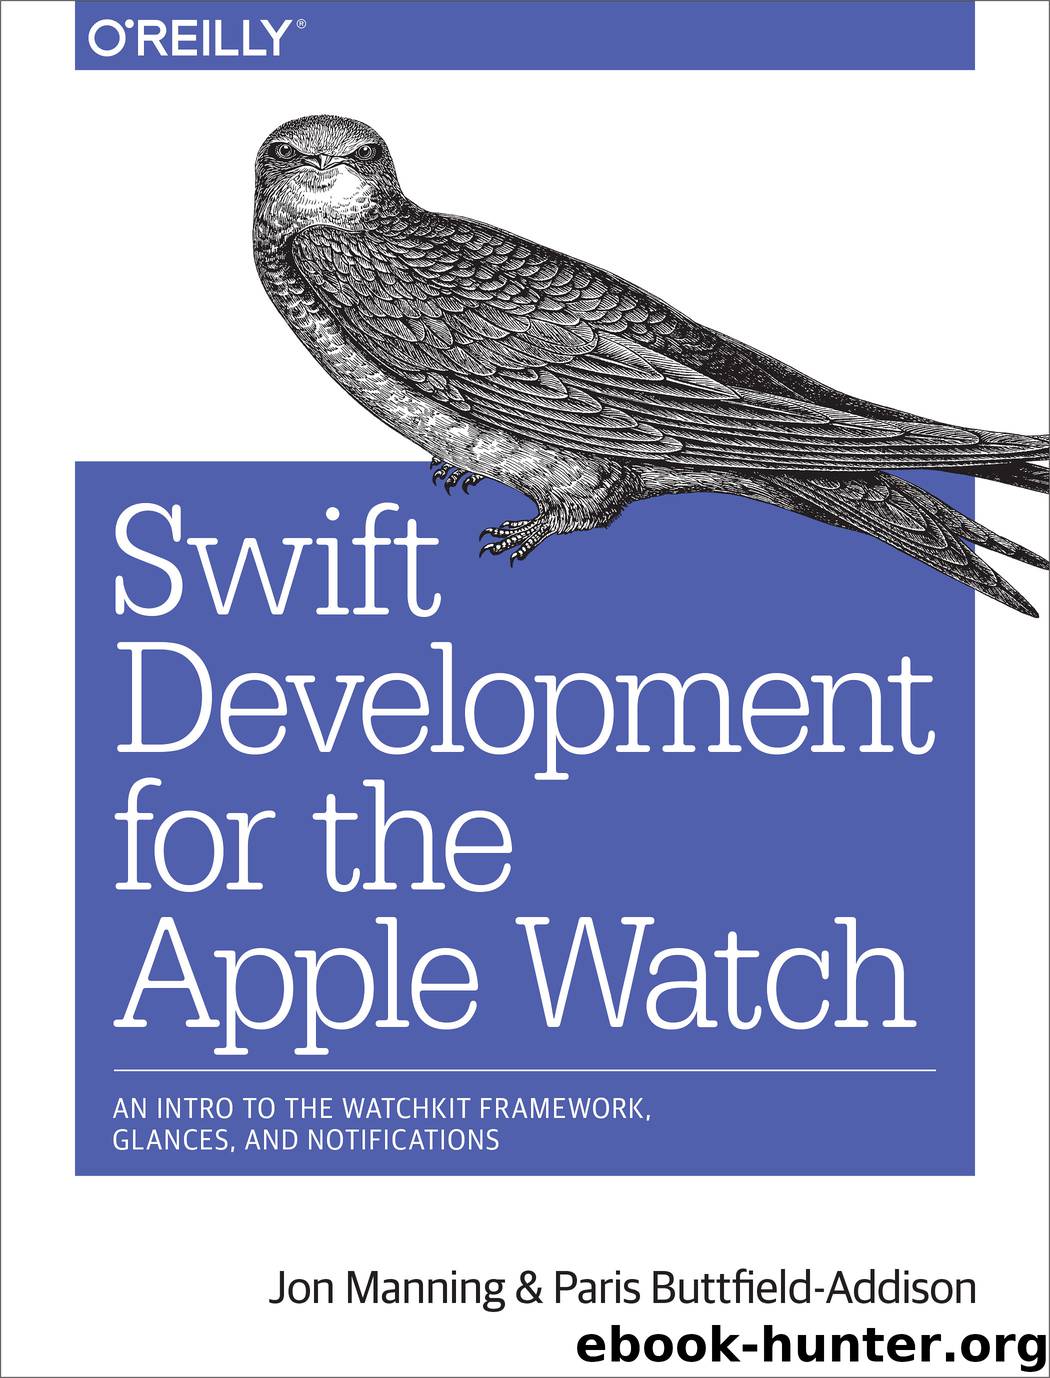 Swift Development for the Apple Watch by Jon Manning